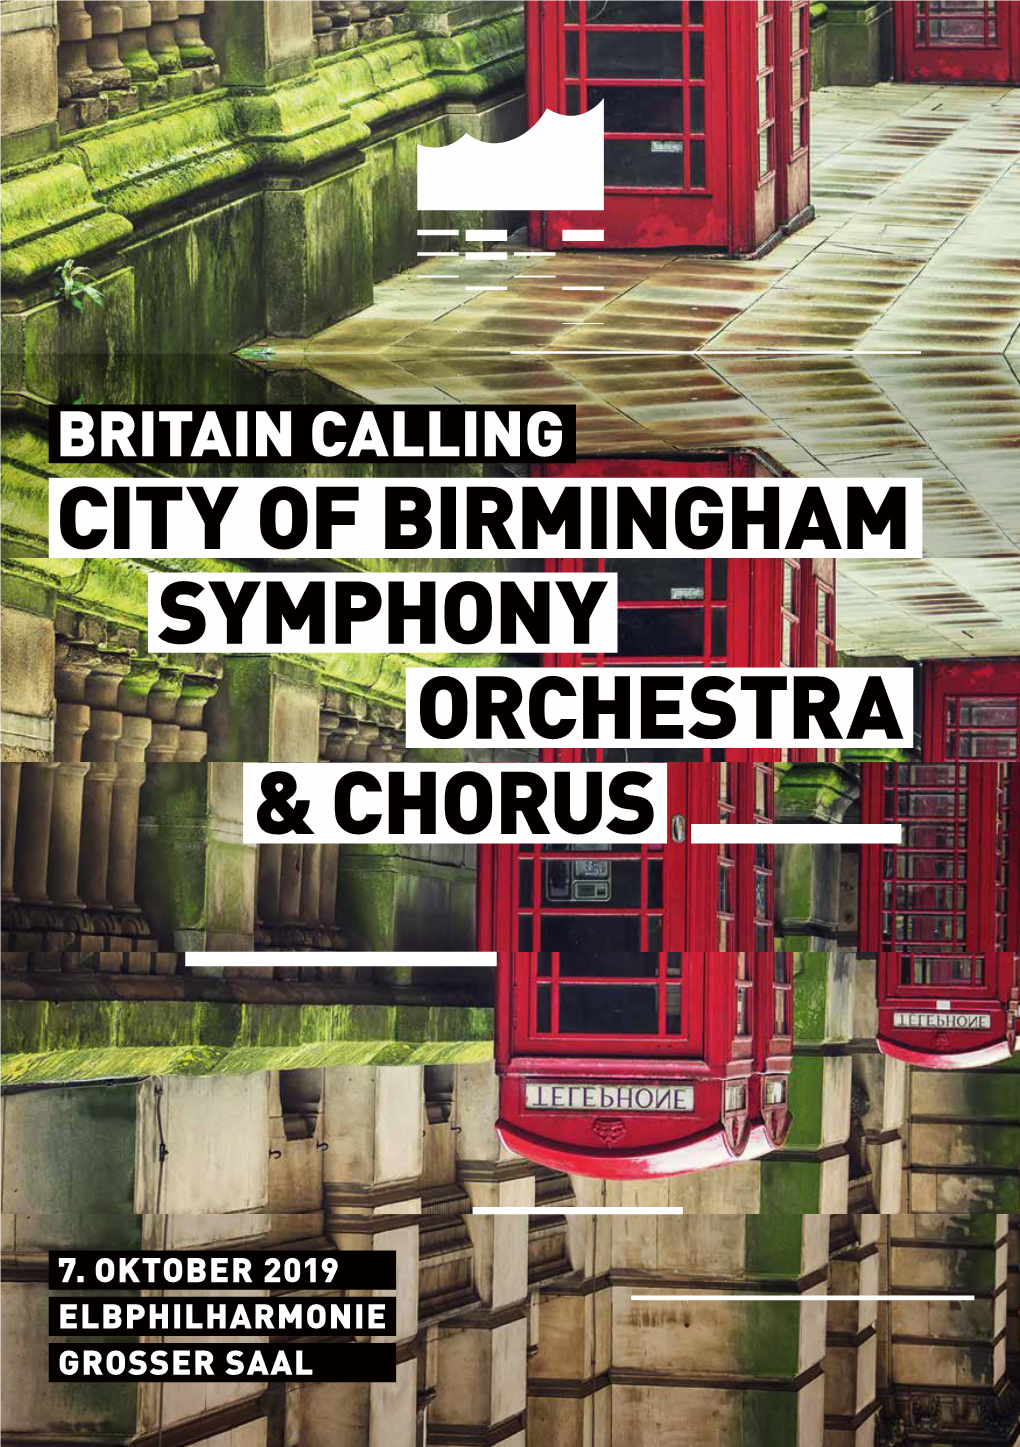 City of Birmingham Symphony Orchestra & Chorus